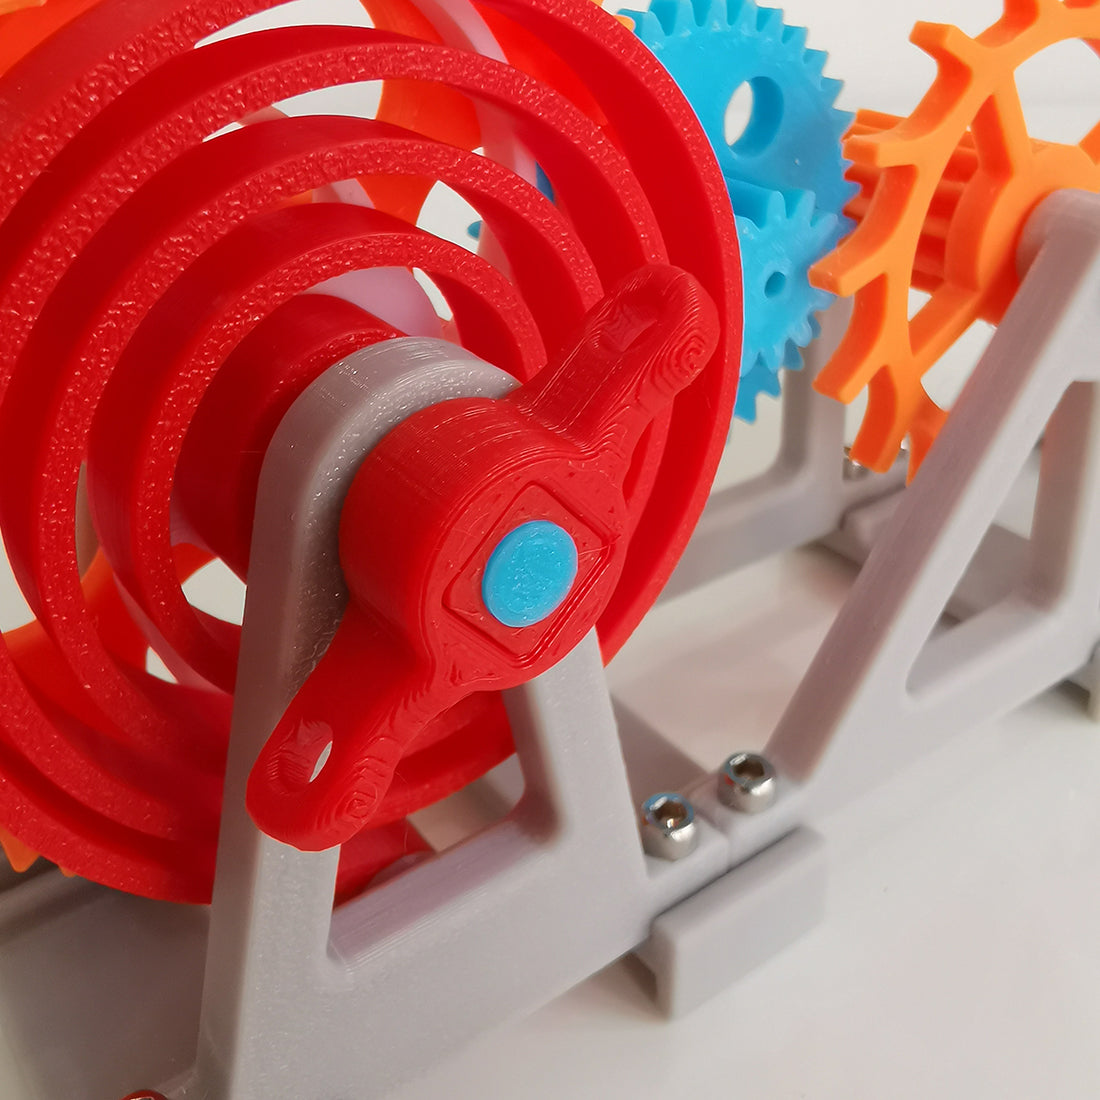 3D Printed Tourbillon Clock Movement Model, Gear Table Model DIY Assembly Model